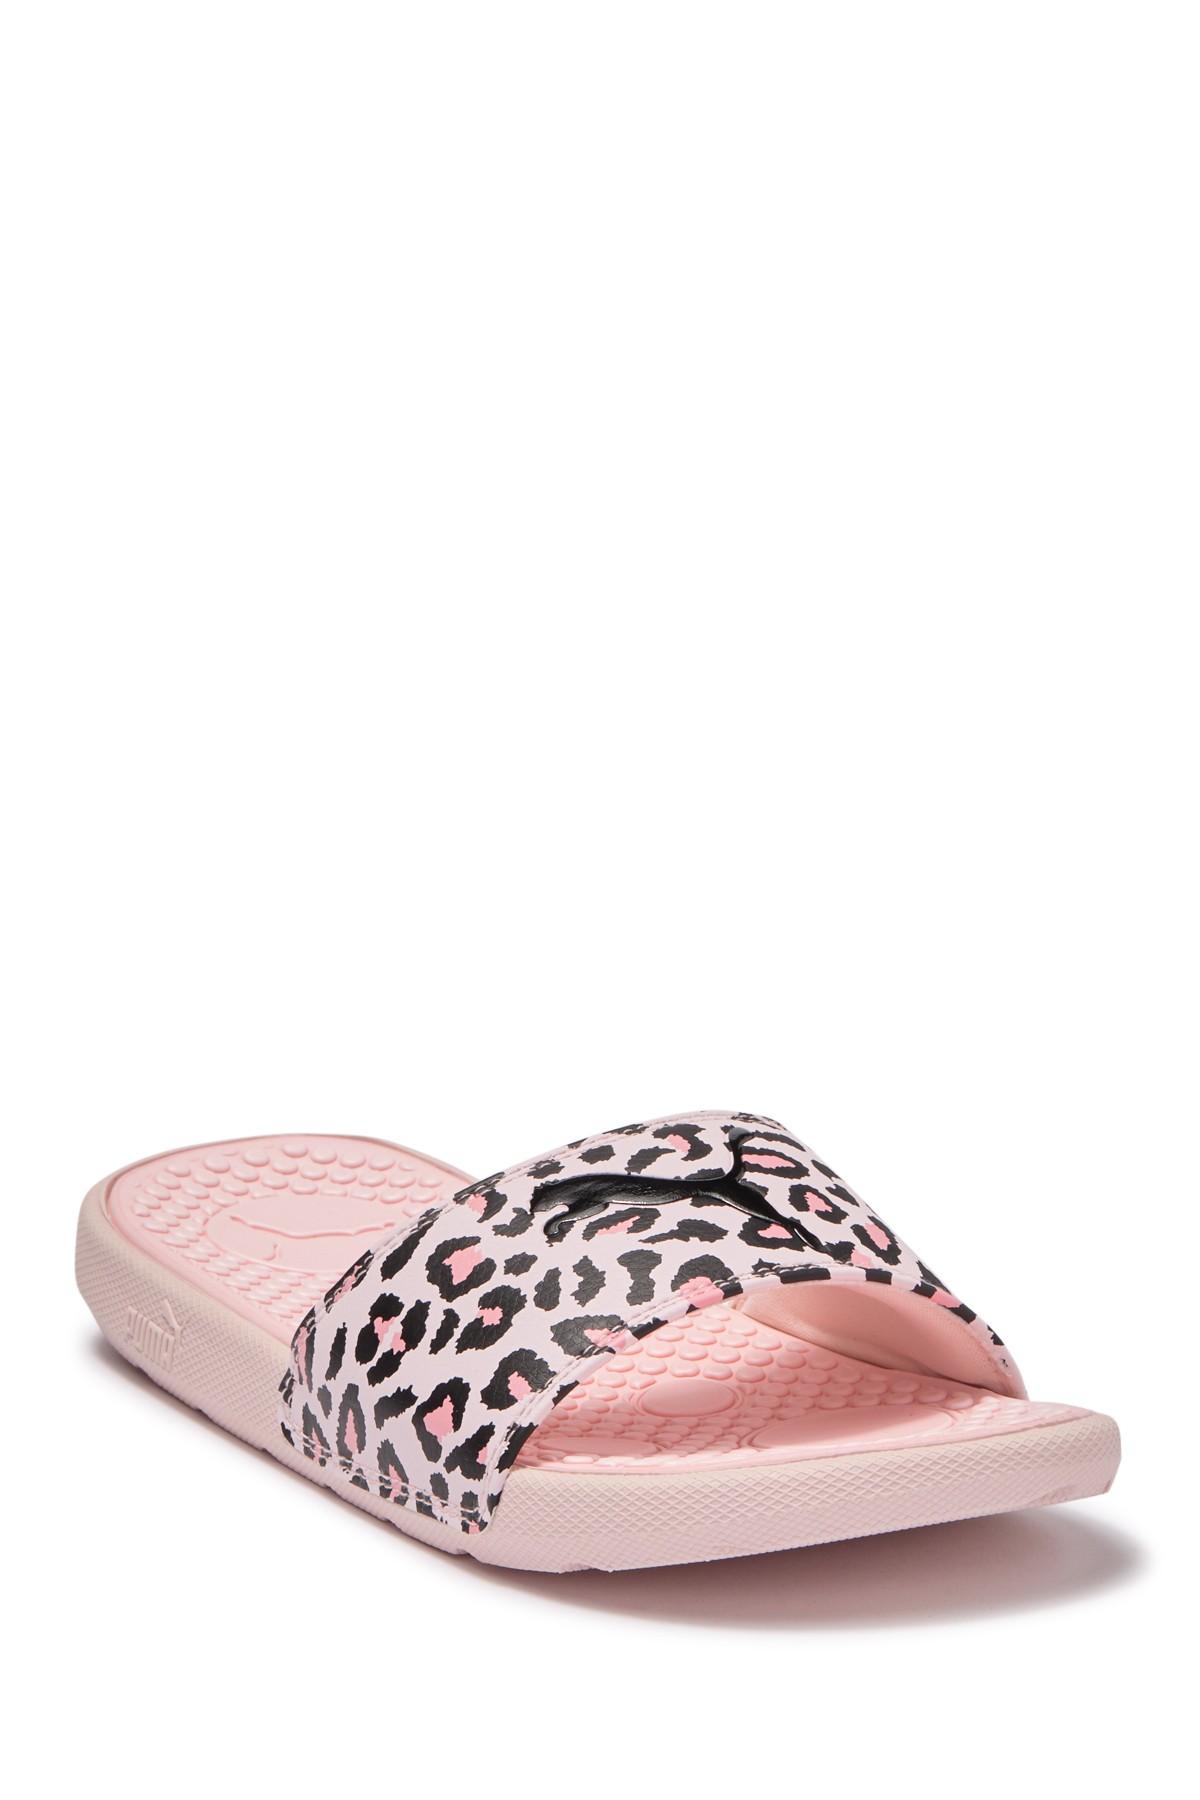 PUMA Cool Cat Leopard Slide Sandal in Pink - Lyst